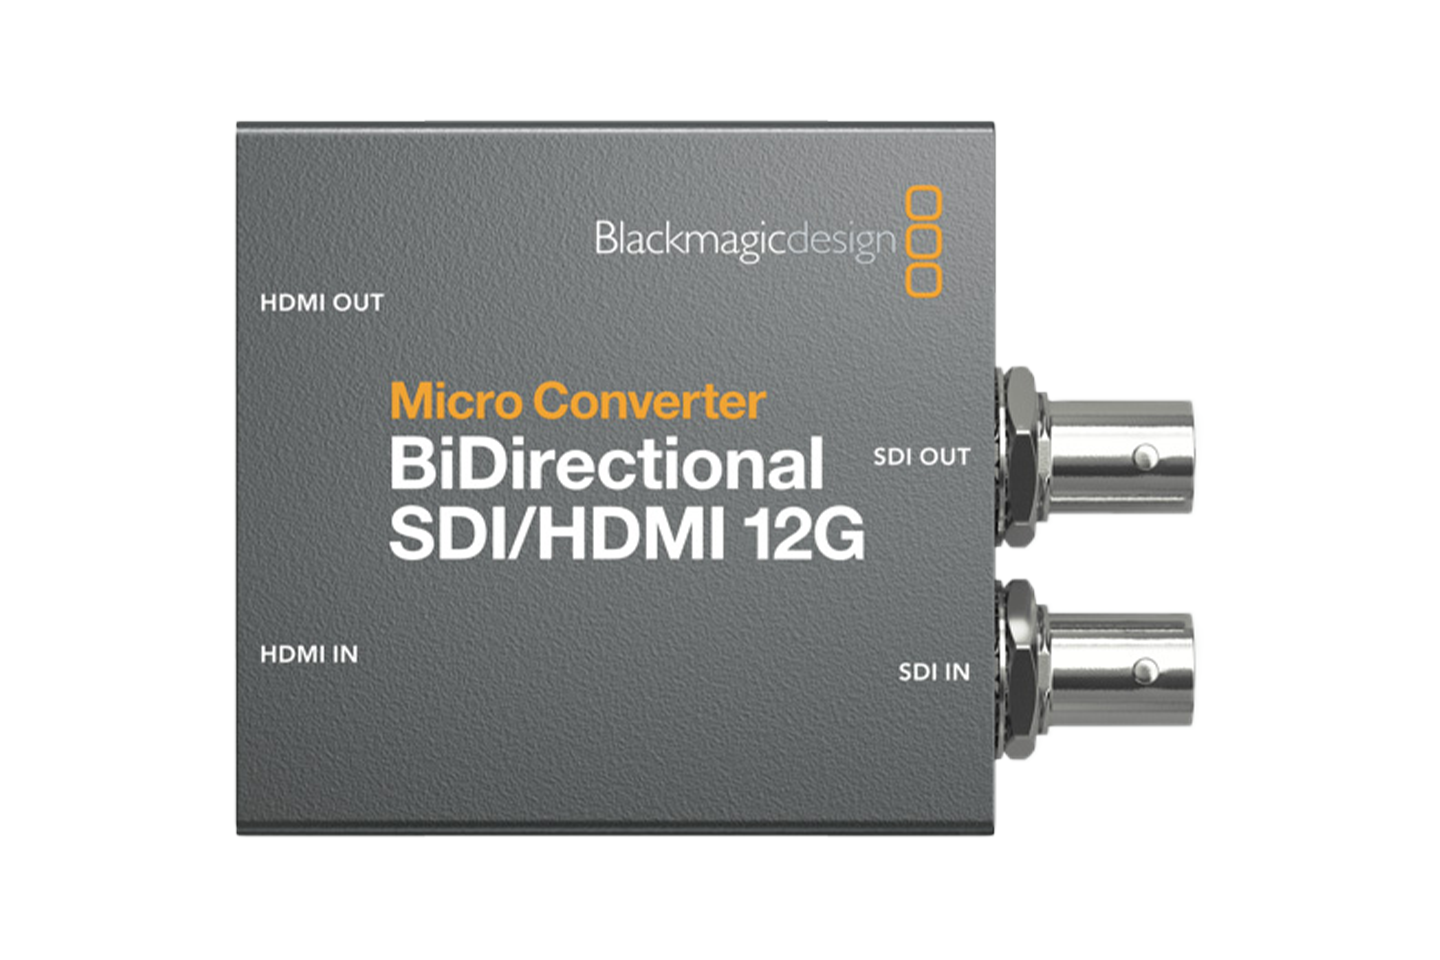 Blackmagic Design BiDirect SDI/HDMI 12G